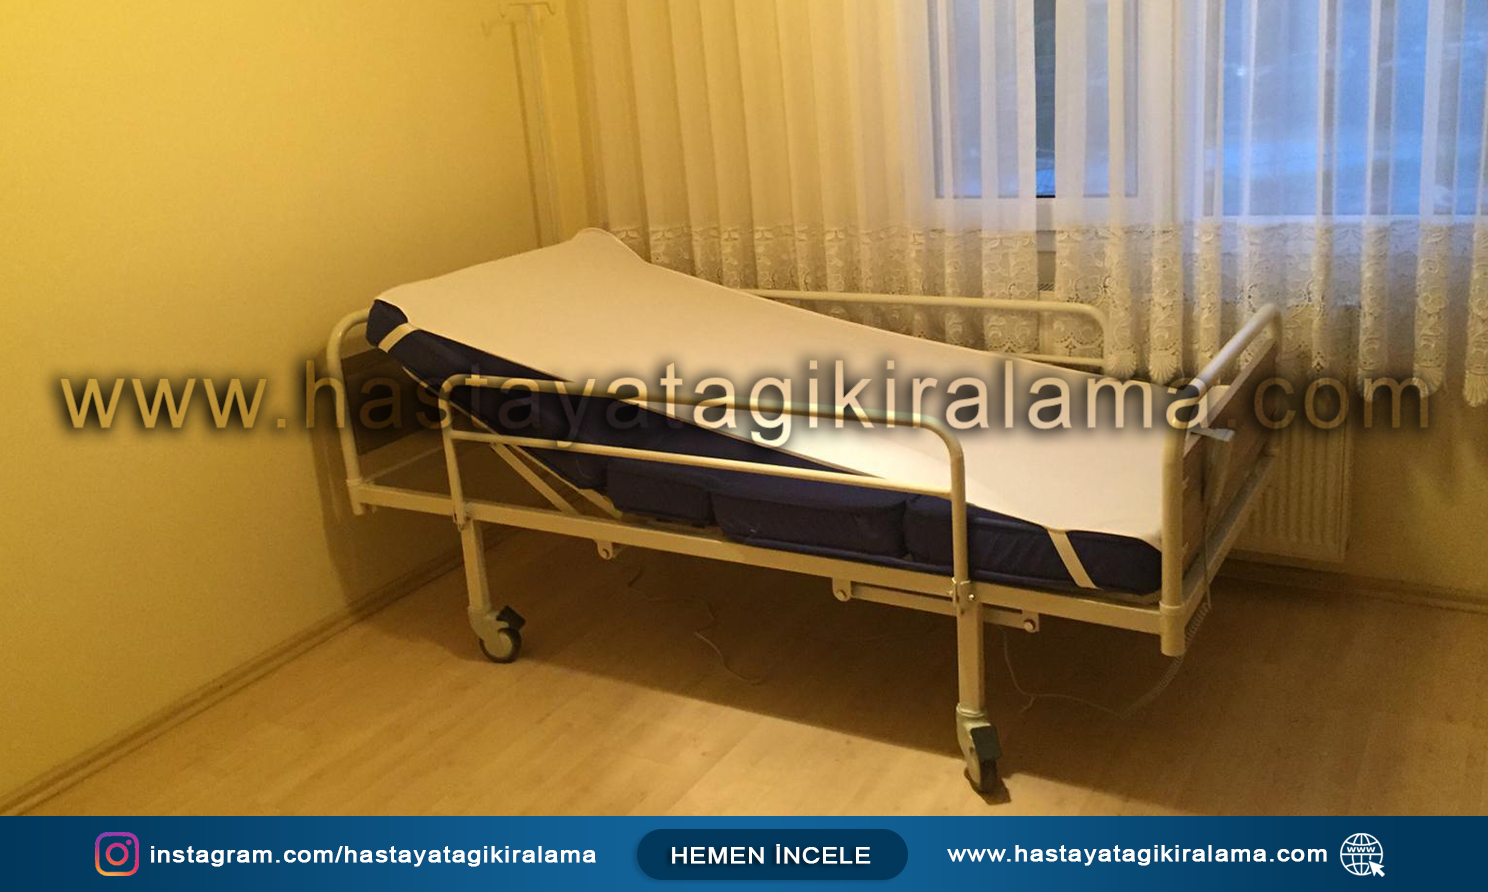 Hasta Yatağı Kiralama Ataşehir -İSTANBUL